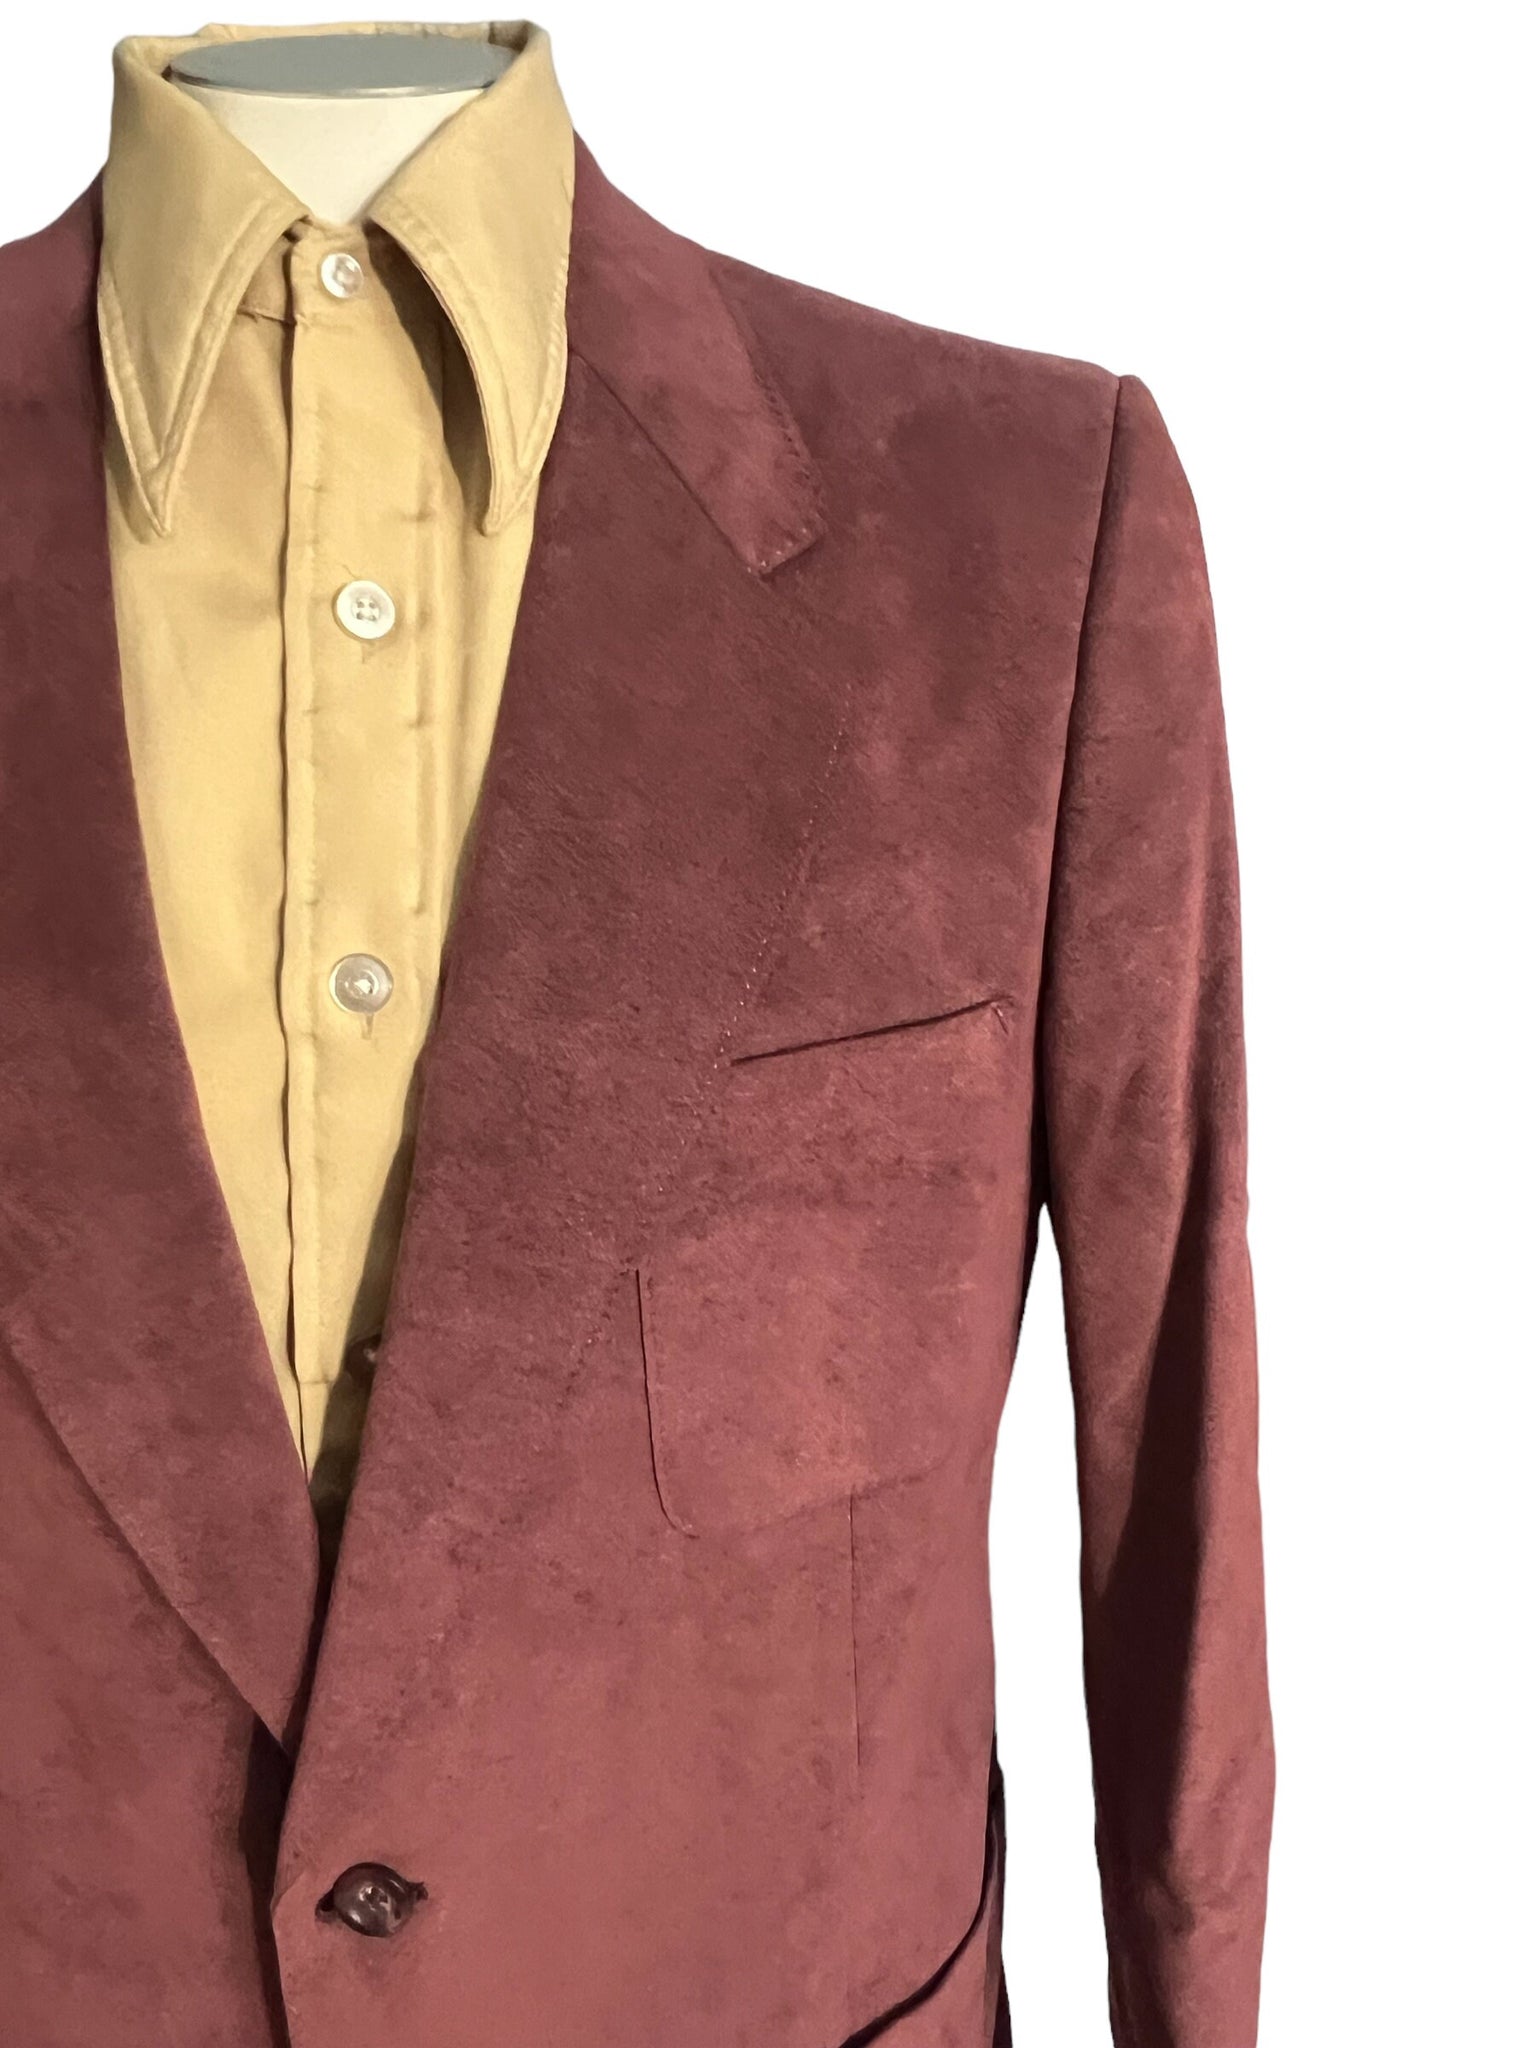 Vintage purple ultra suede Suit jacket 42 Thos Stuart